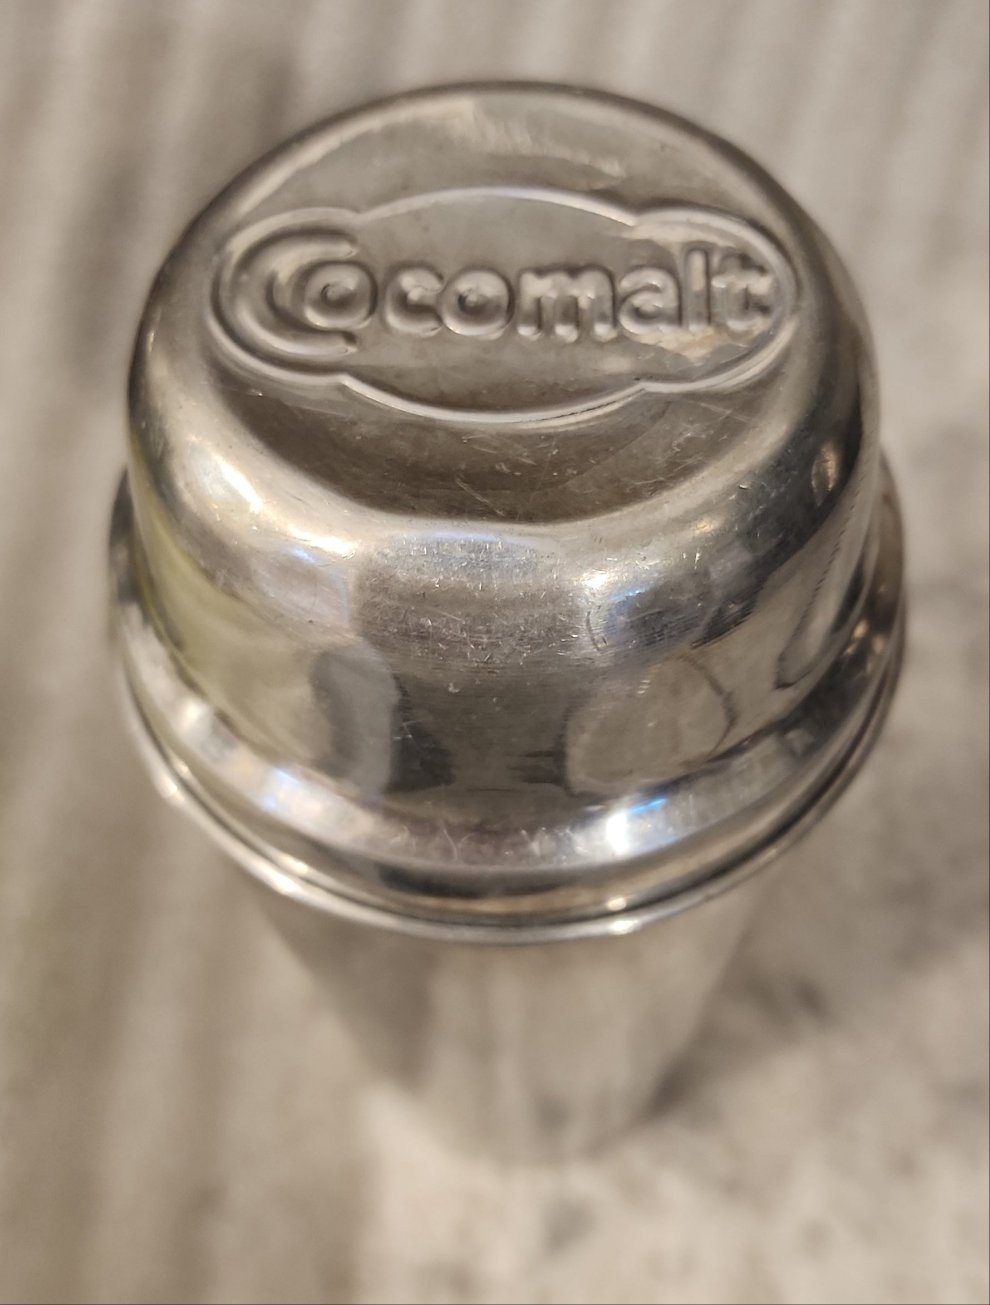 Vntg Cocomalt Shaker